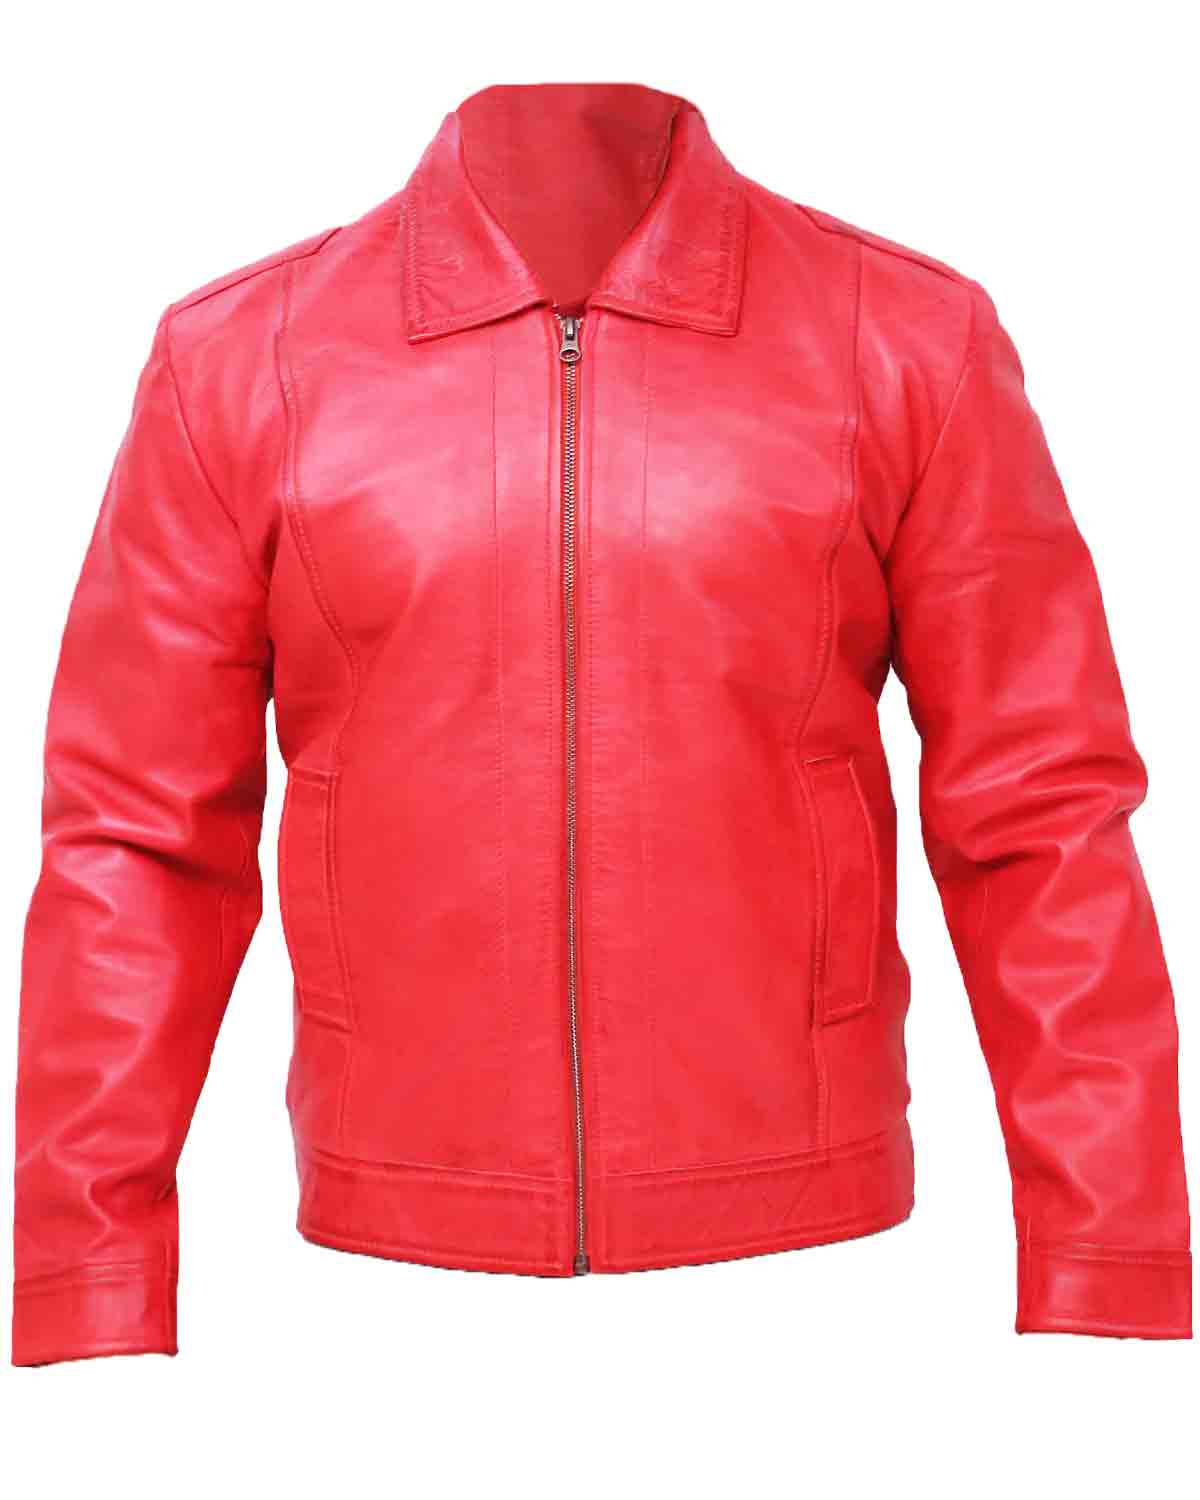 Mens Vintage Distressed Red Leather Jacket | Elite Jacket